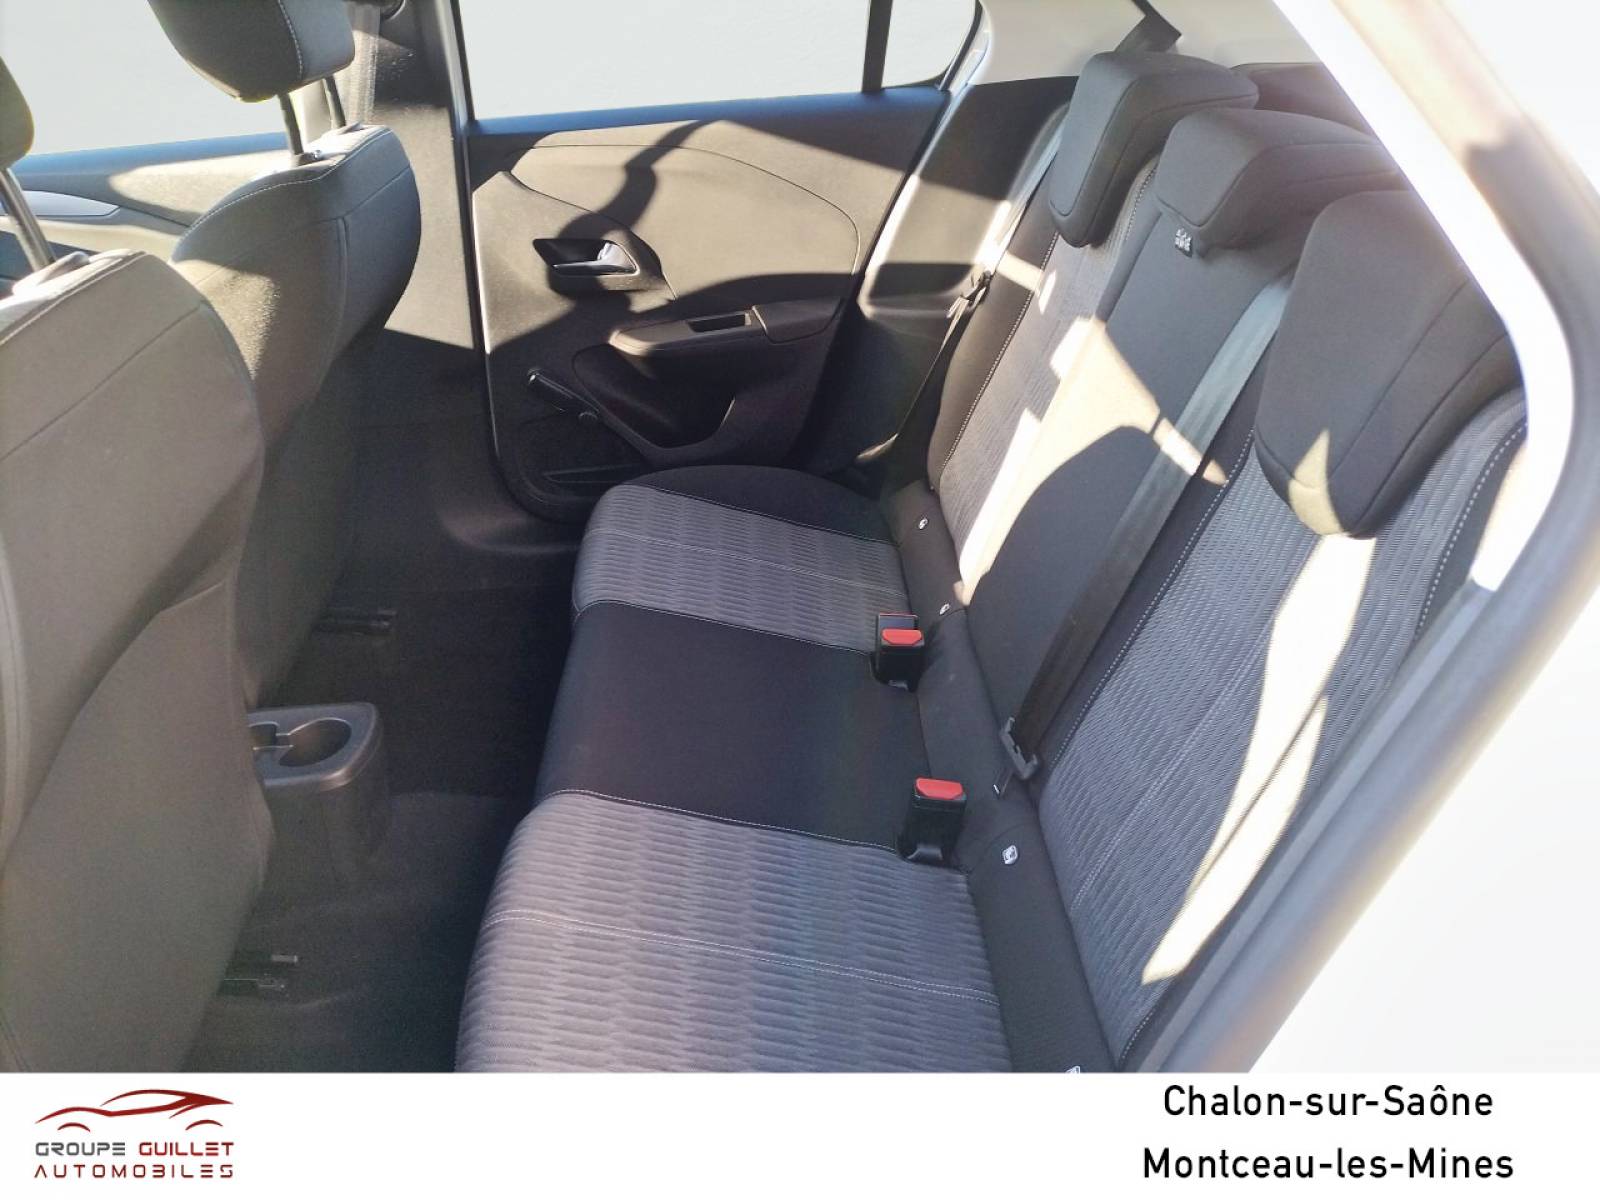 OPEL Corsa 1.2 75 ch BVM5 - véhicule d'occasion - Groupe Guillet - Opel Magicauto Chalon - 71380 - Saint-Marcel - 10